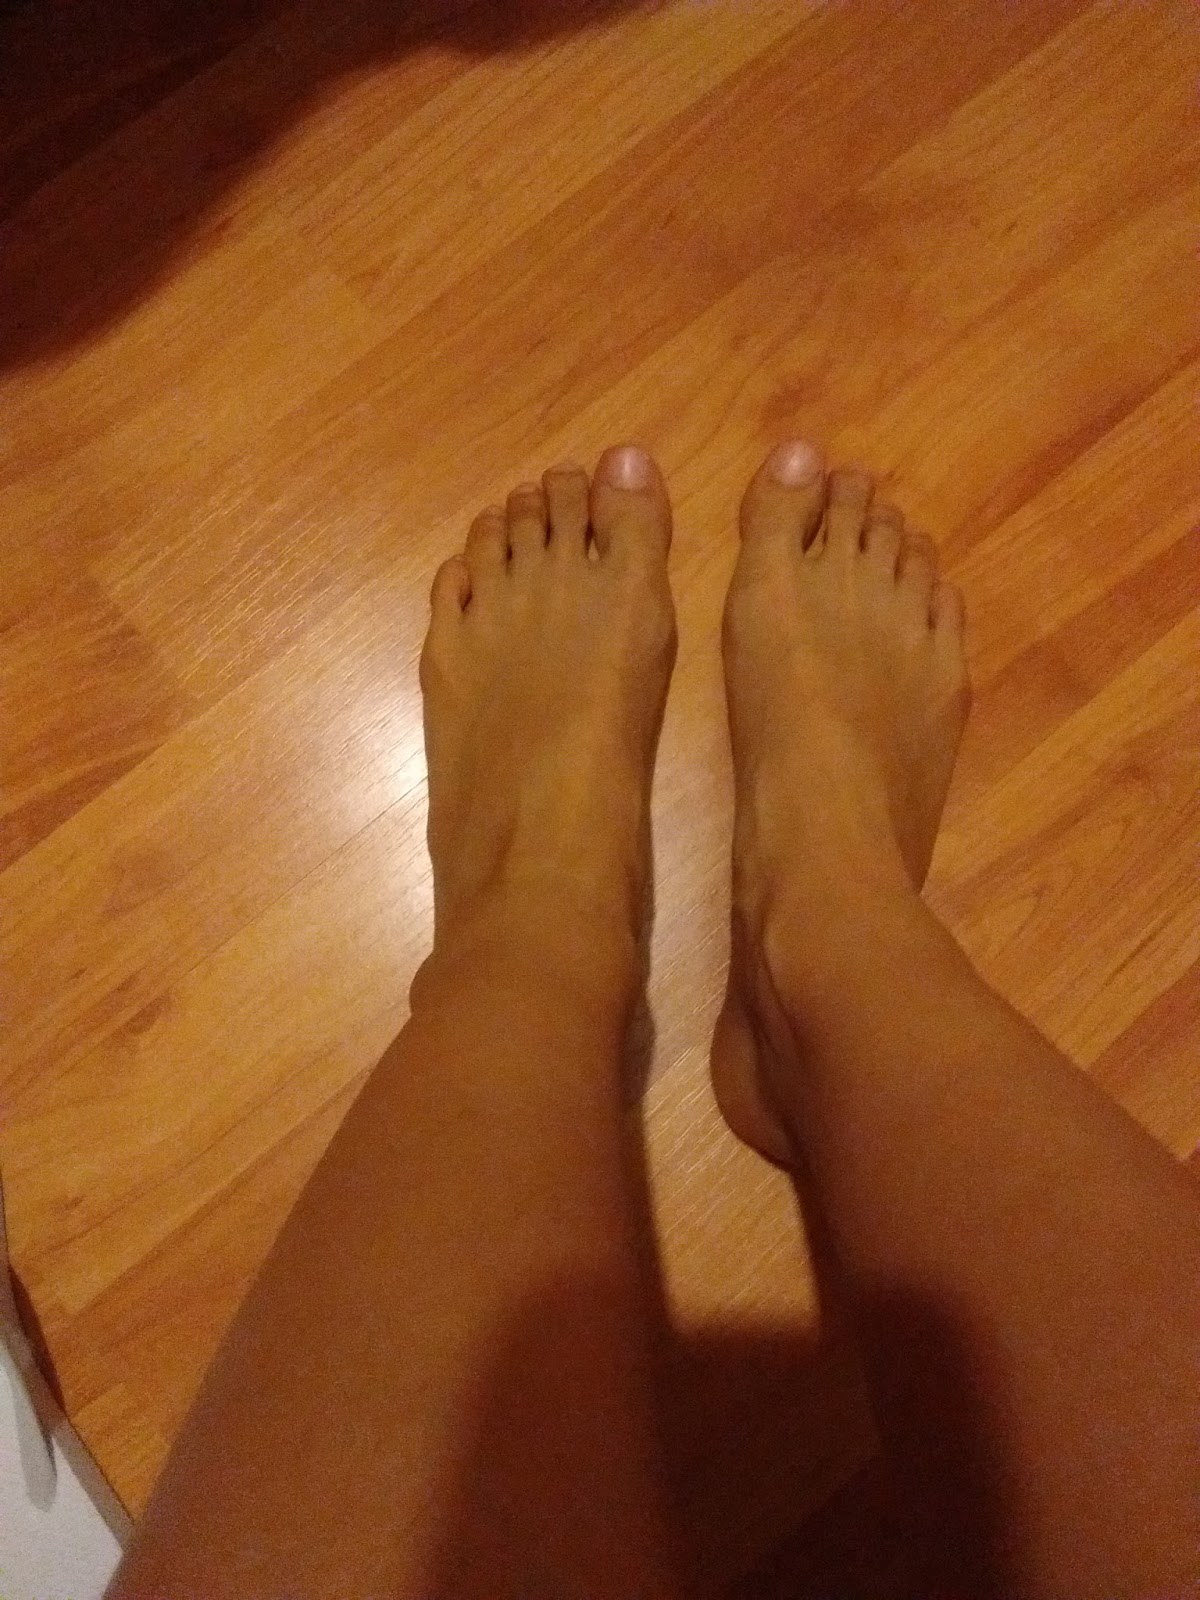 Natural nails long toes and sexy shoes